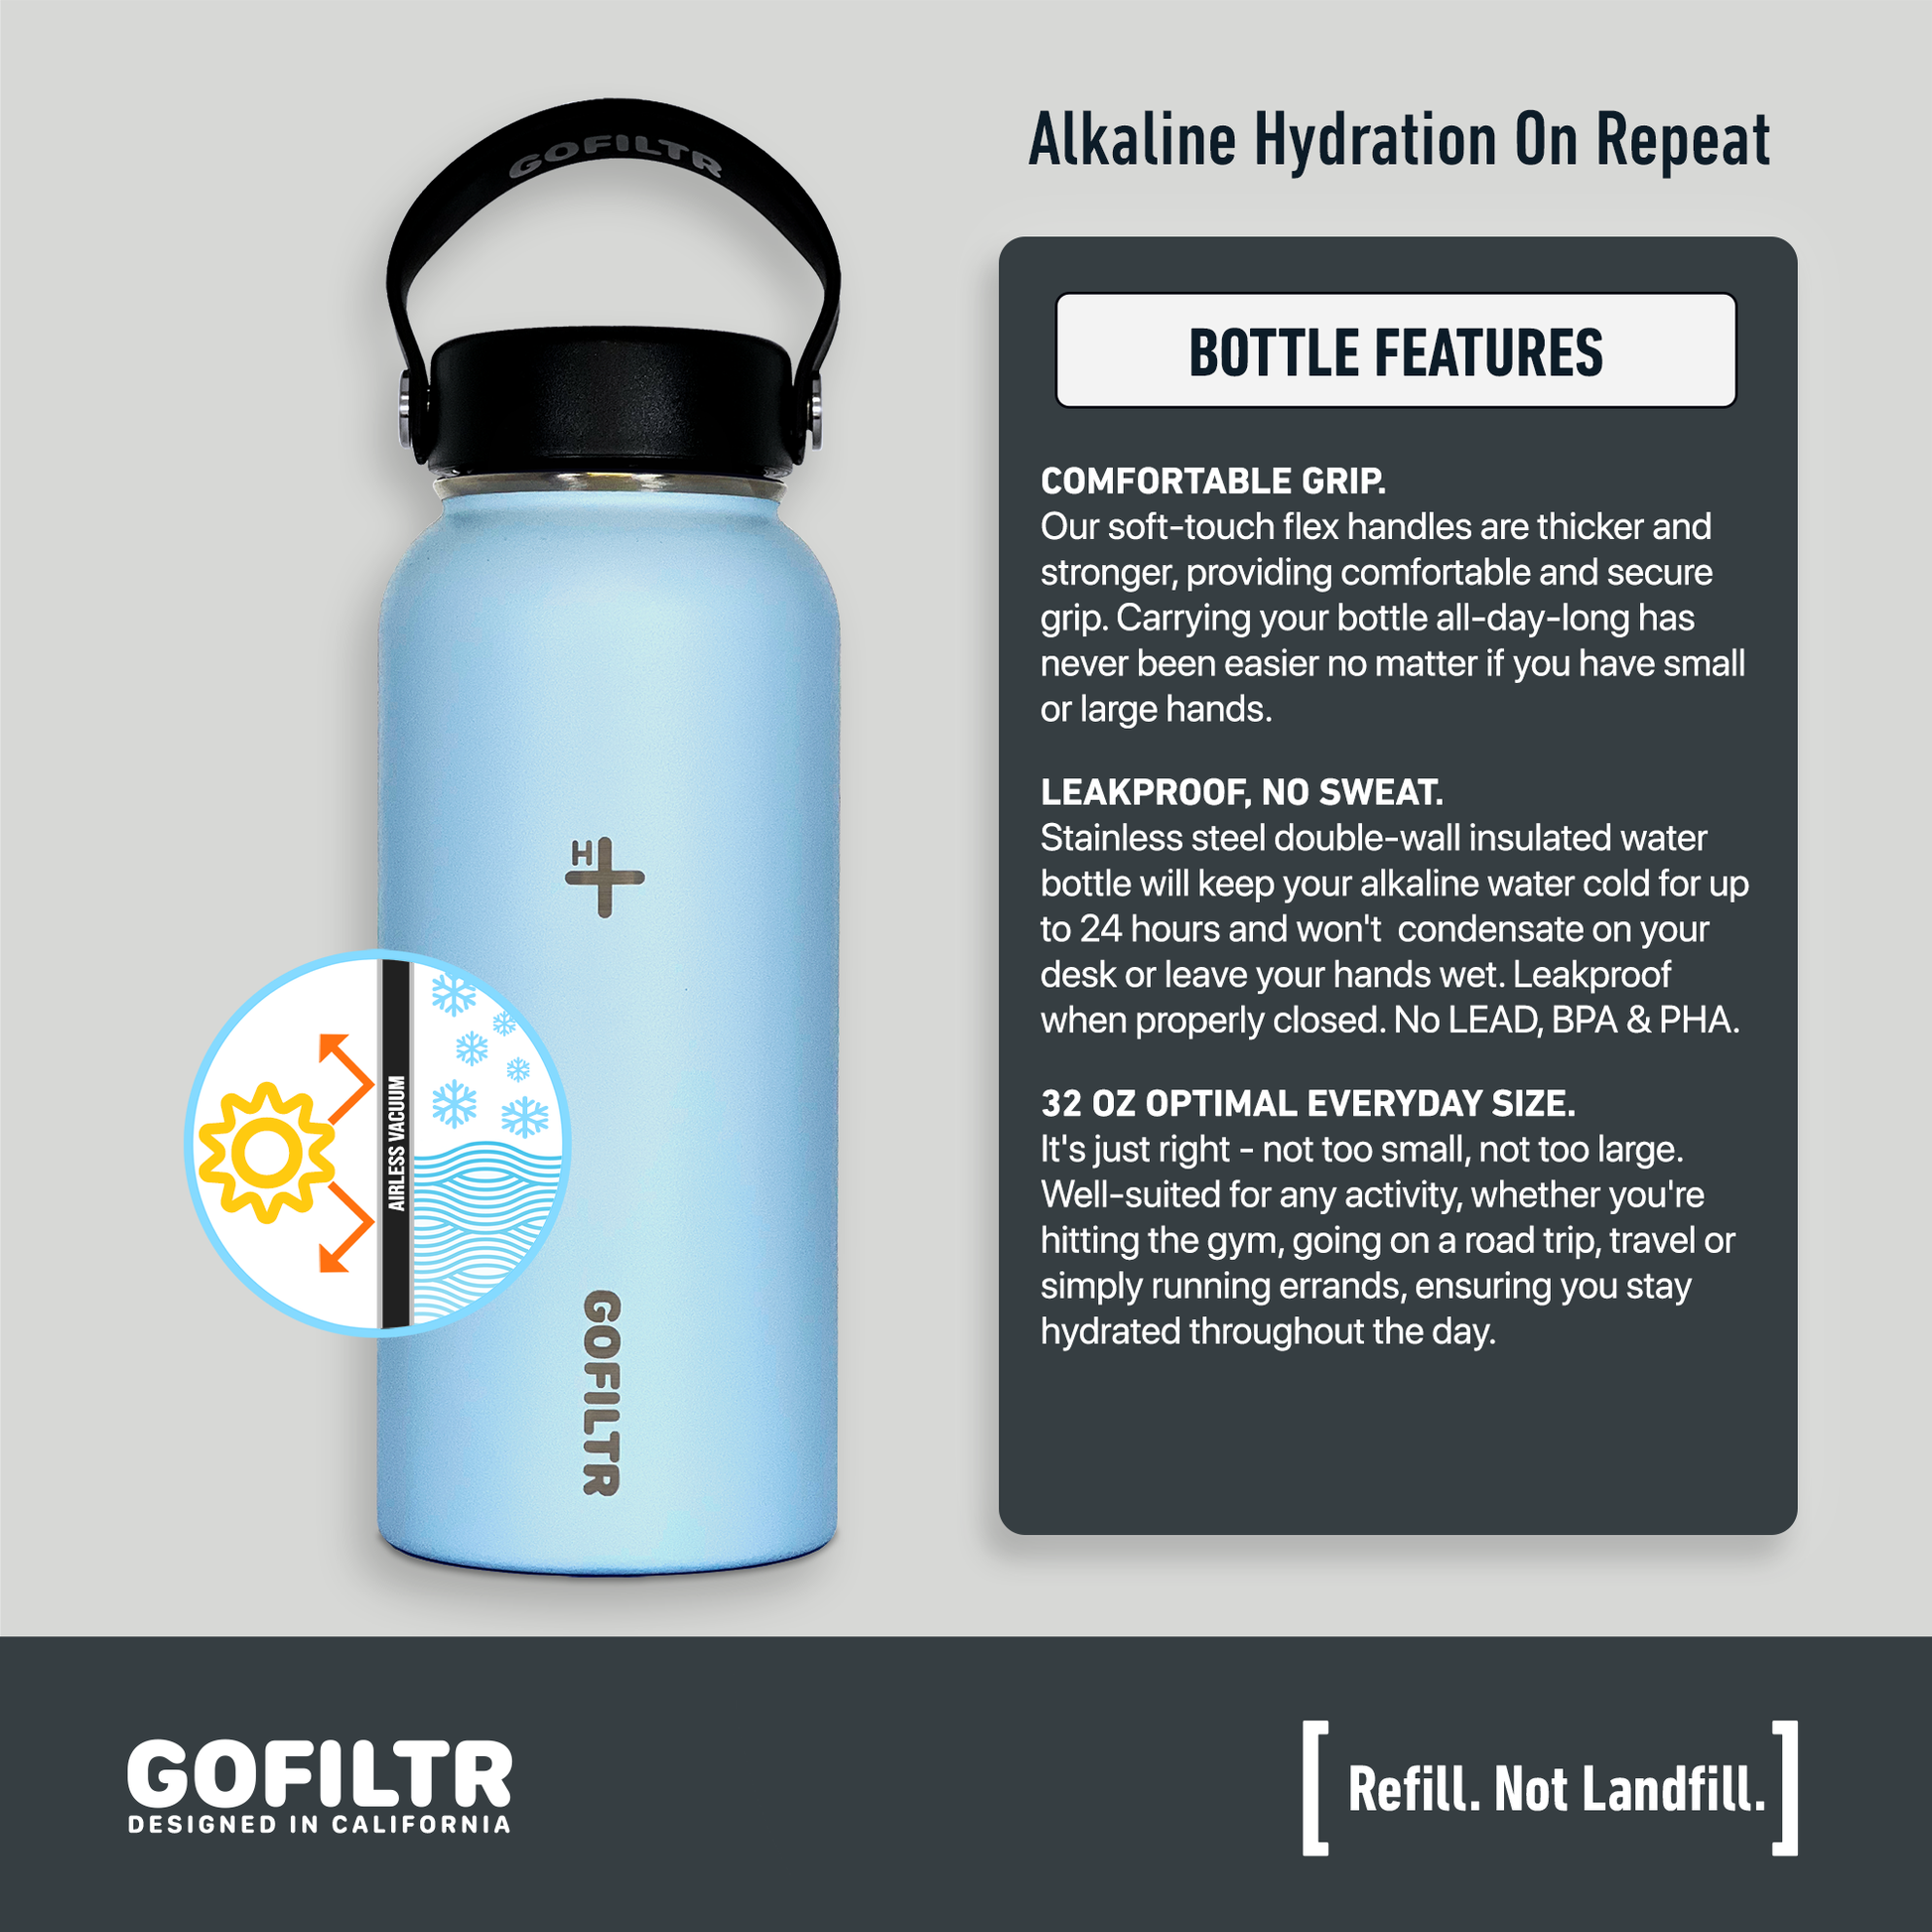 gofiltr, go filter, go filter alkaline water bottle, water filter, alkaline water filter, water pitcher, alkaline water pitcher, water filter for bottle